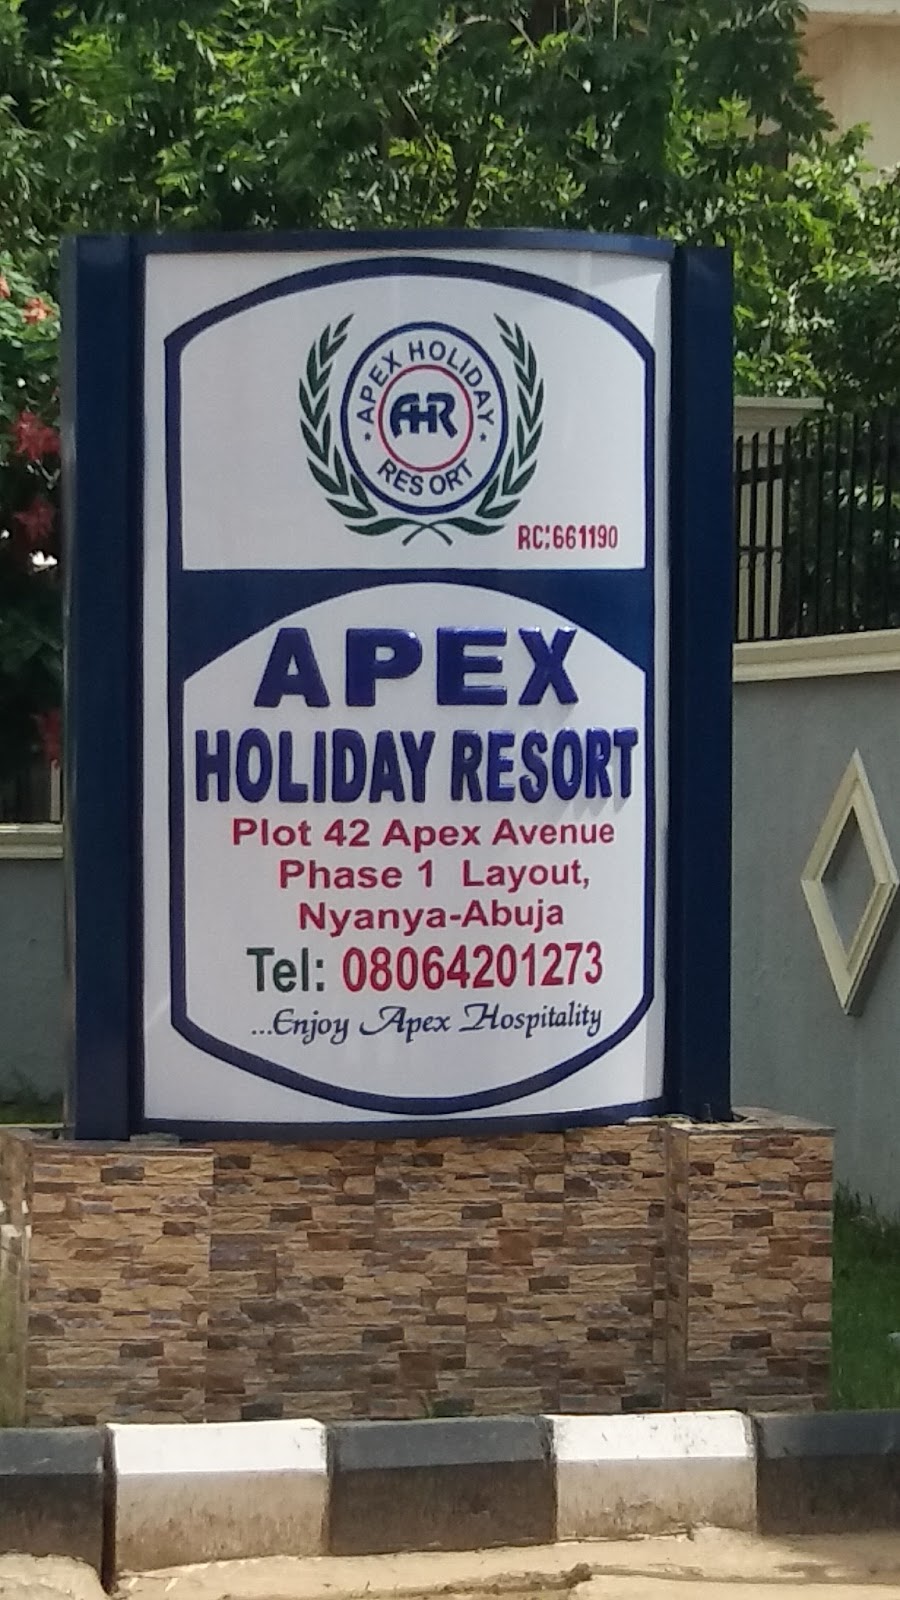 Apex Holiday Resort Nyanya, Abuja